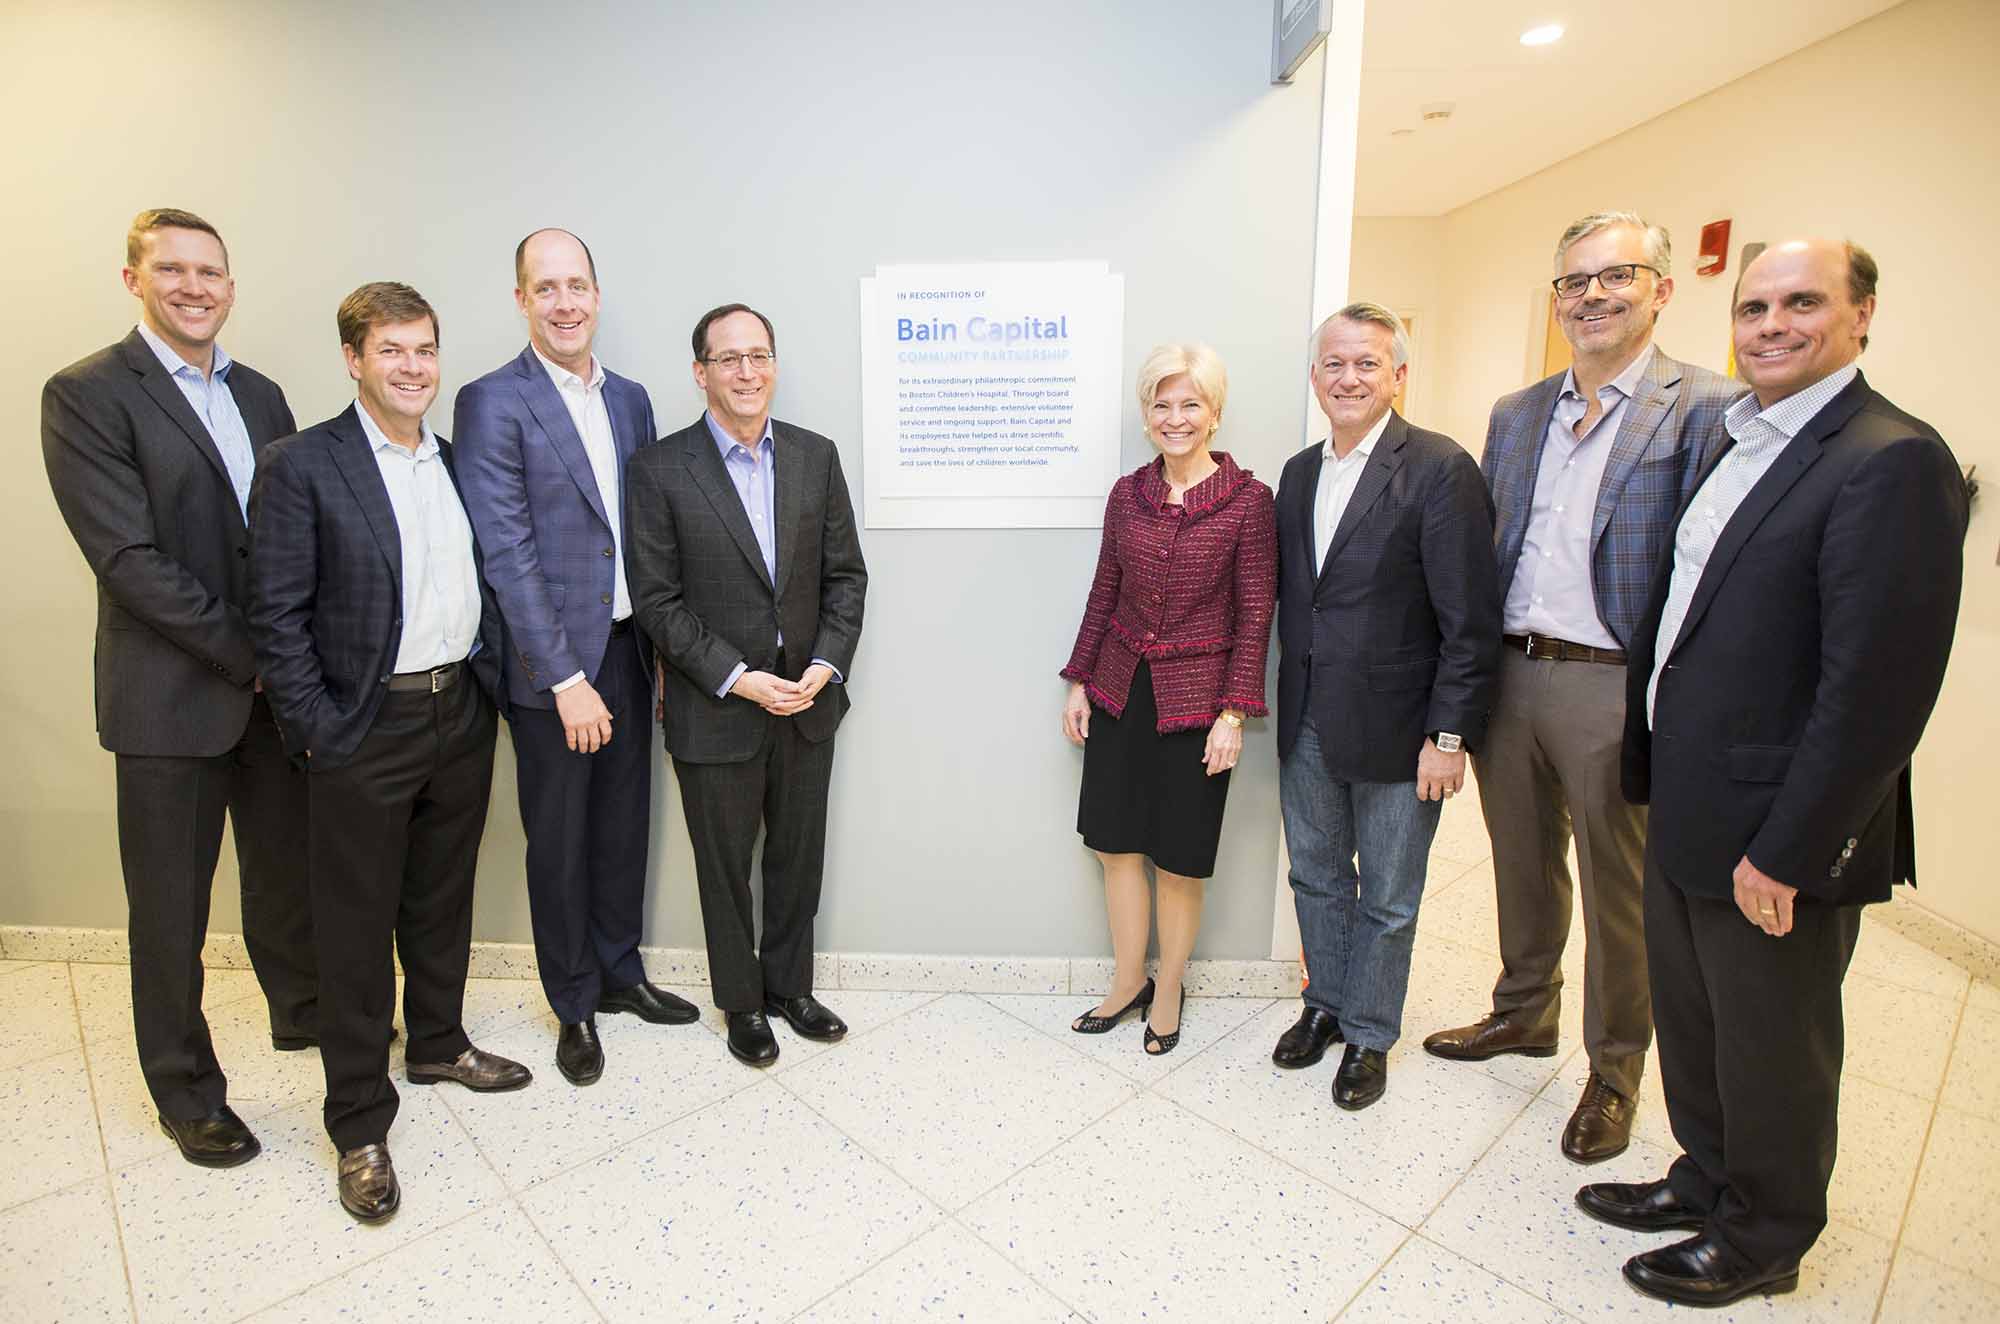 Boston Children’s Hospital and Bain Capital Celebrate Their Partnership